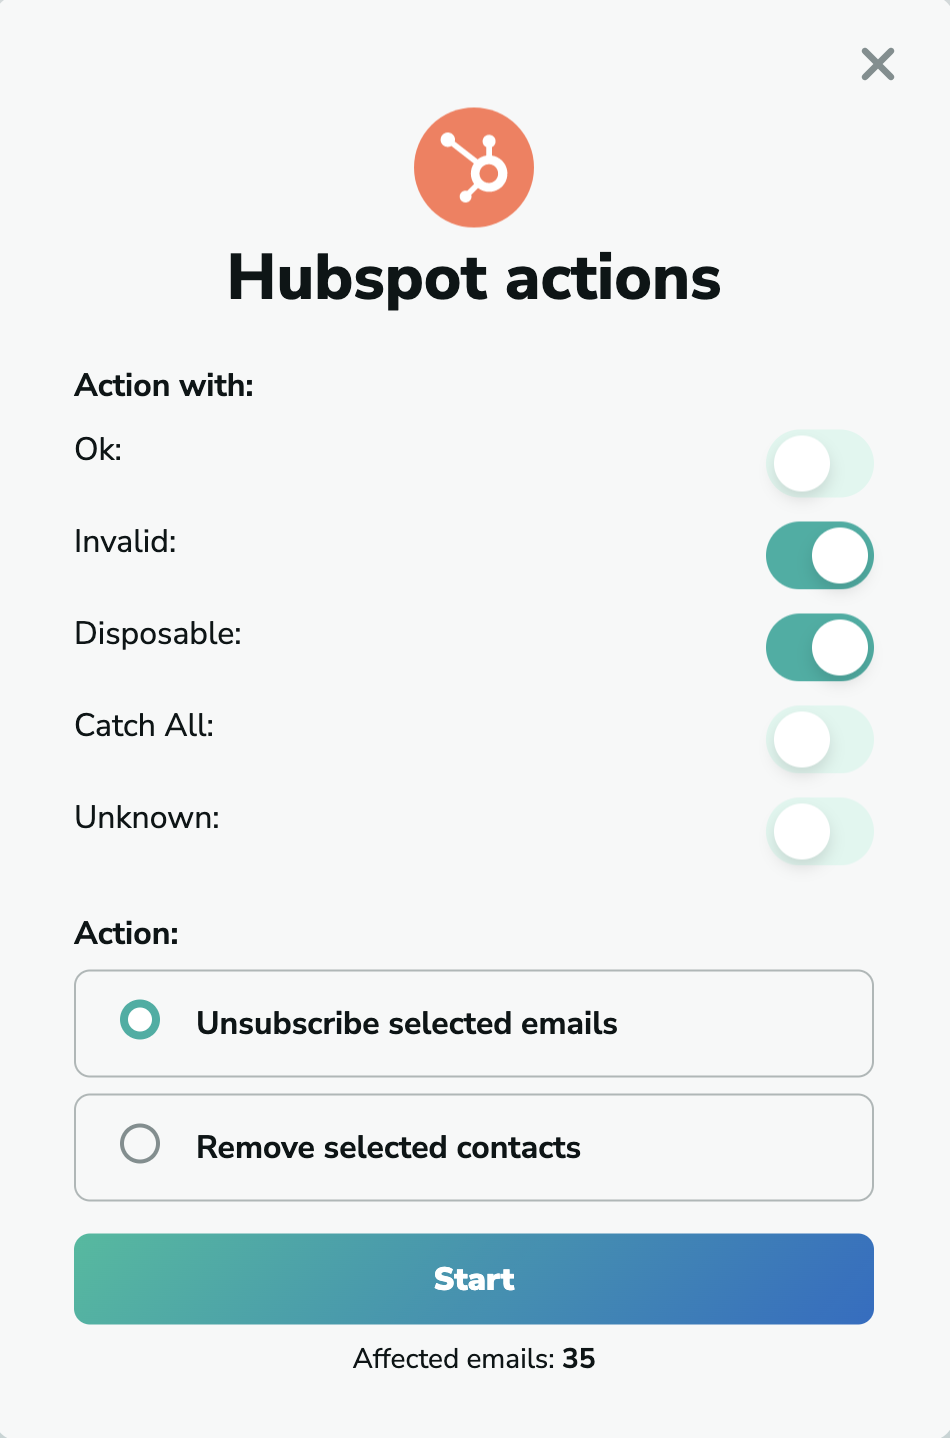 Hubspot unsubscribe emails in MillionVerifier